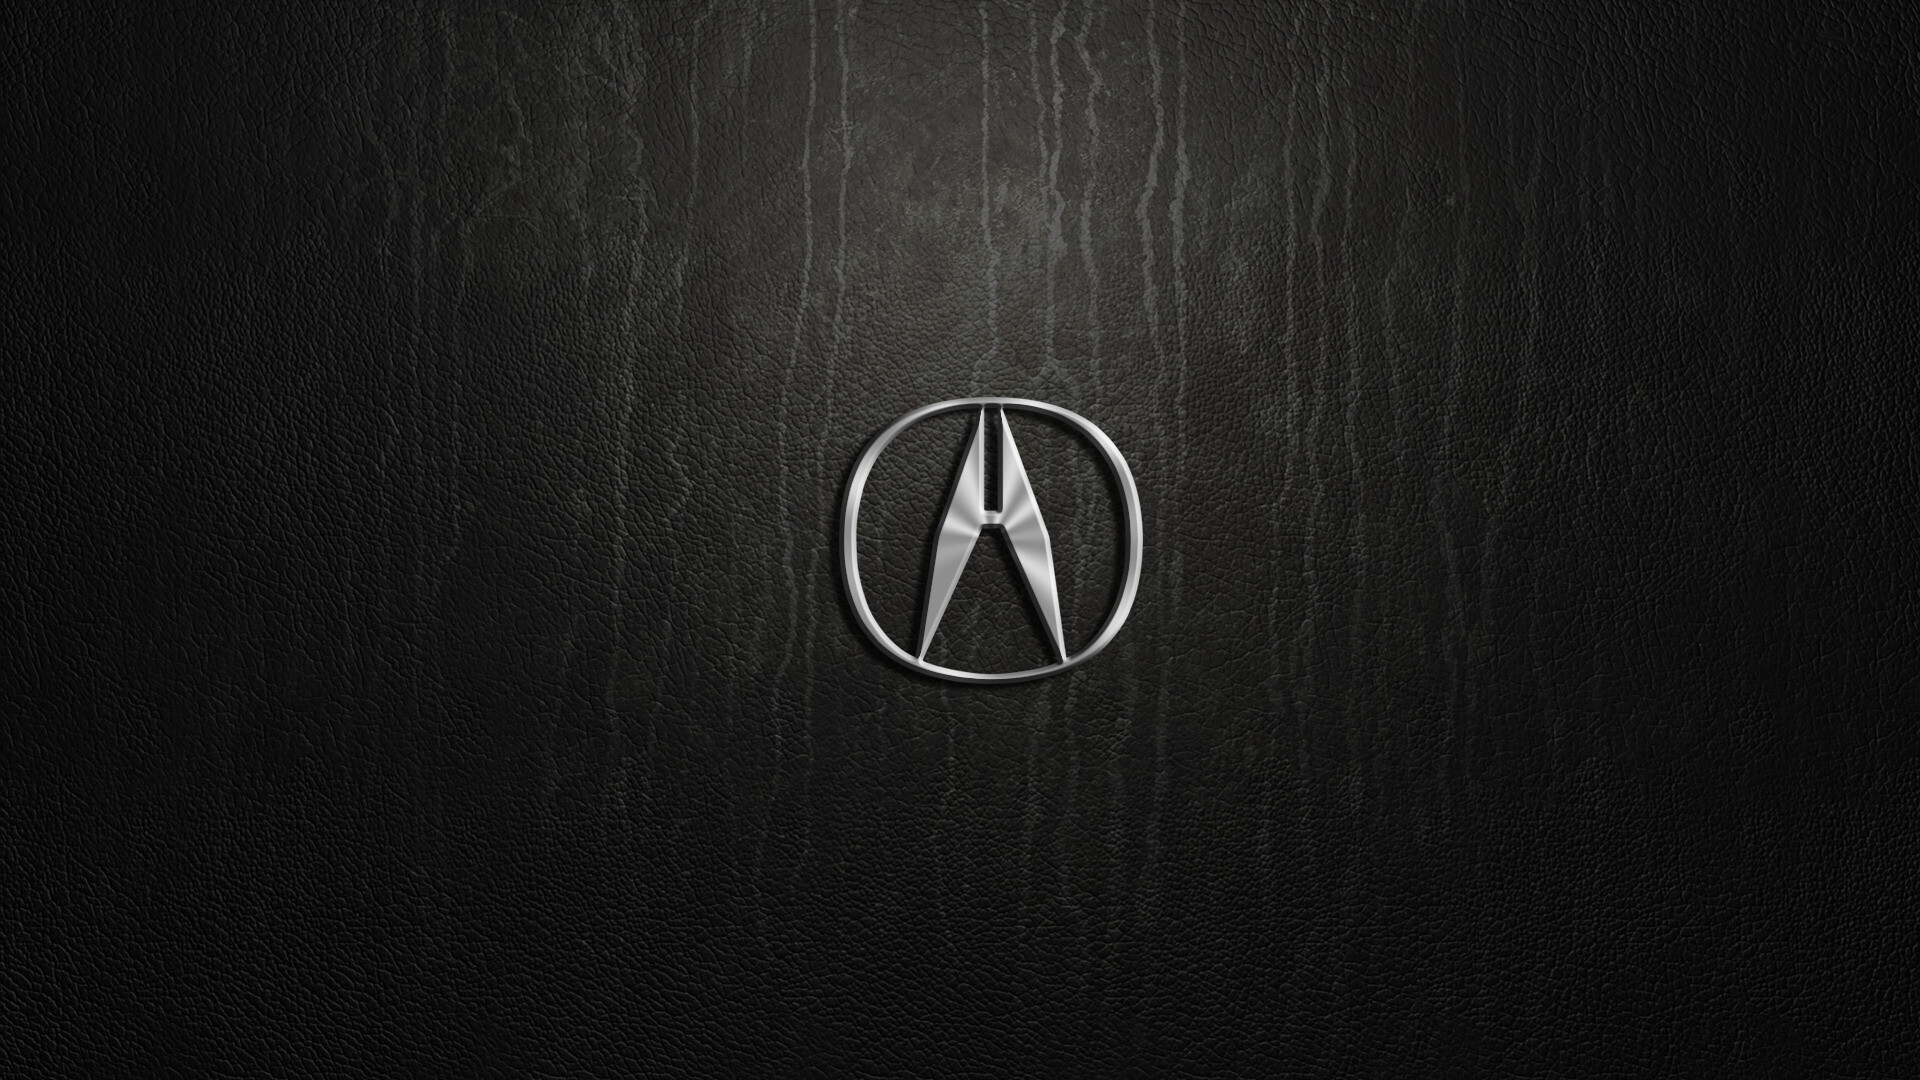 Acura: Honda's premium brand that makes cars and SUVs, Logo. 1920x1080 Full HD Background.